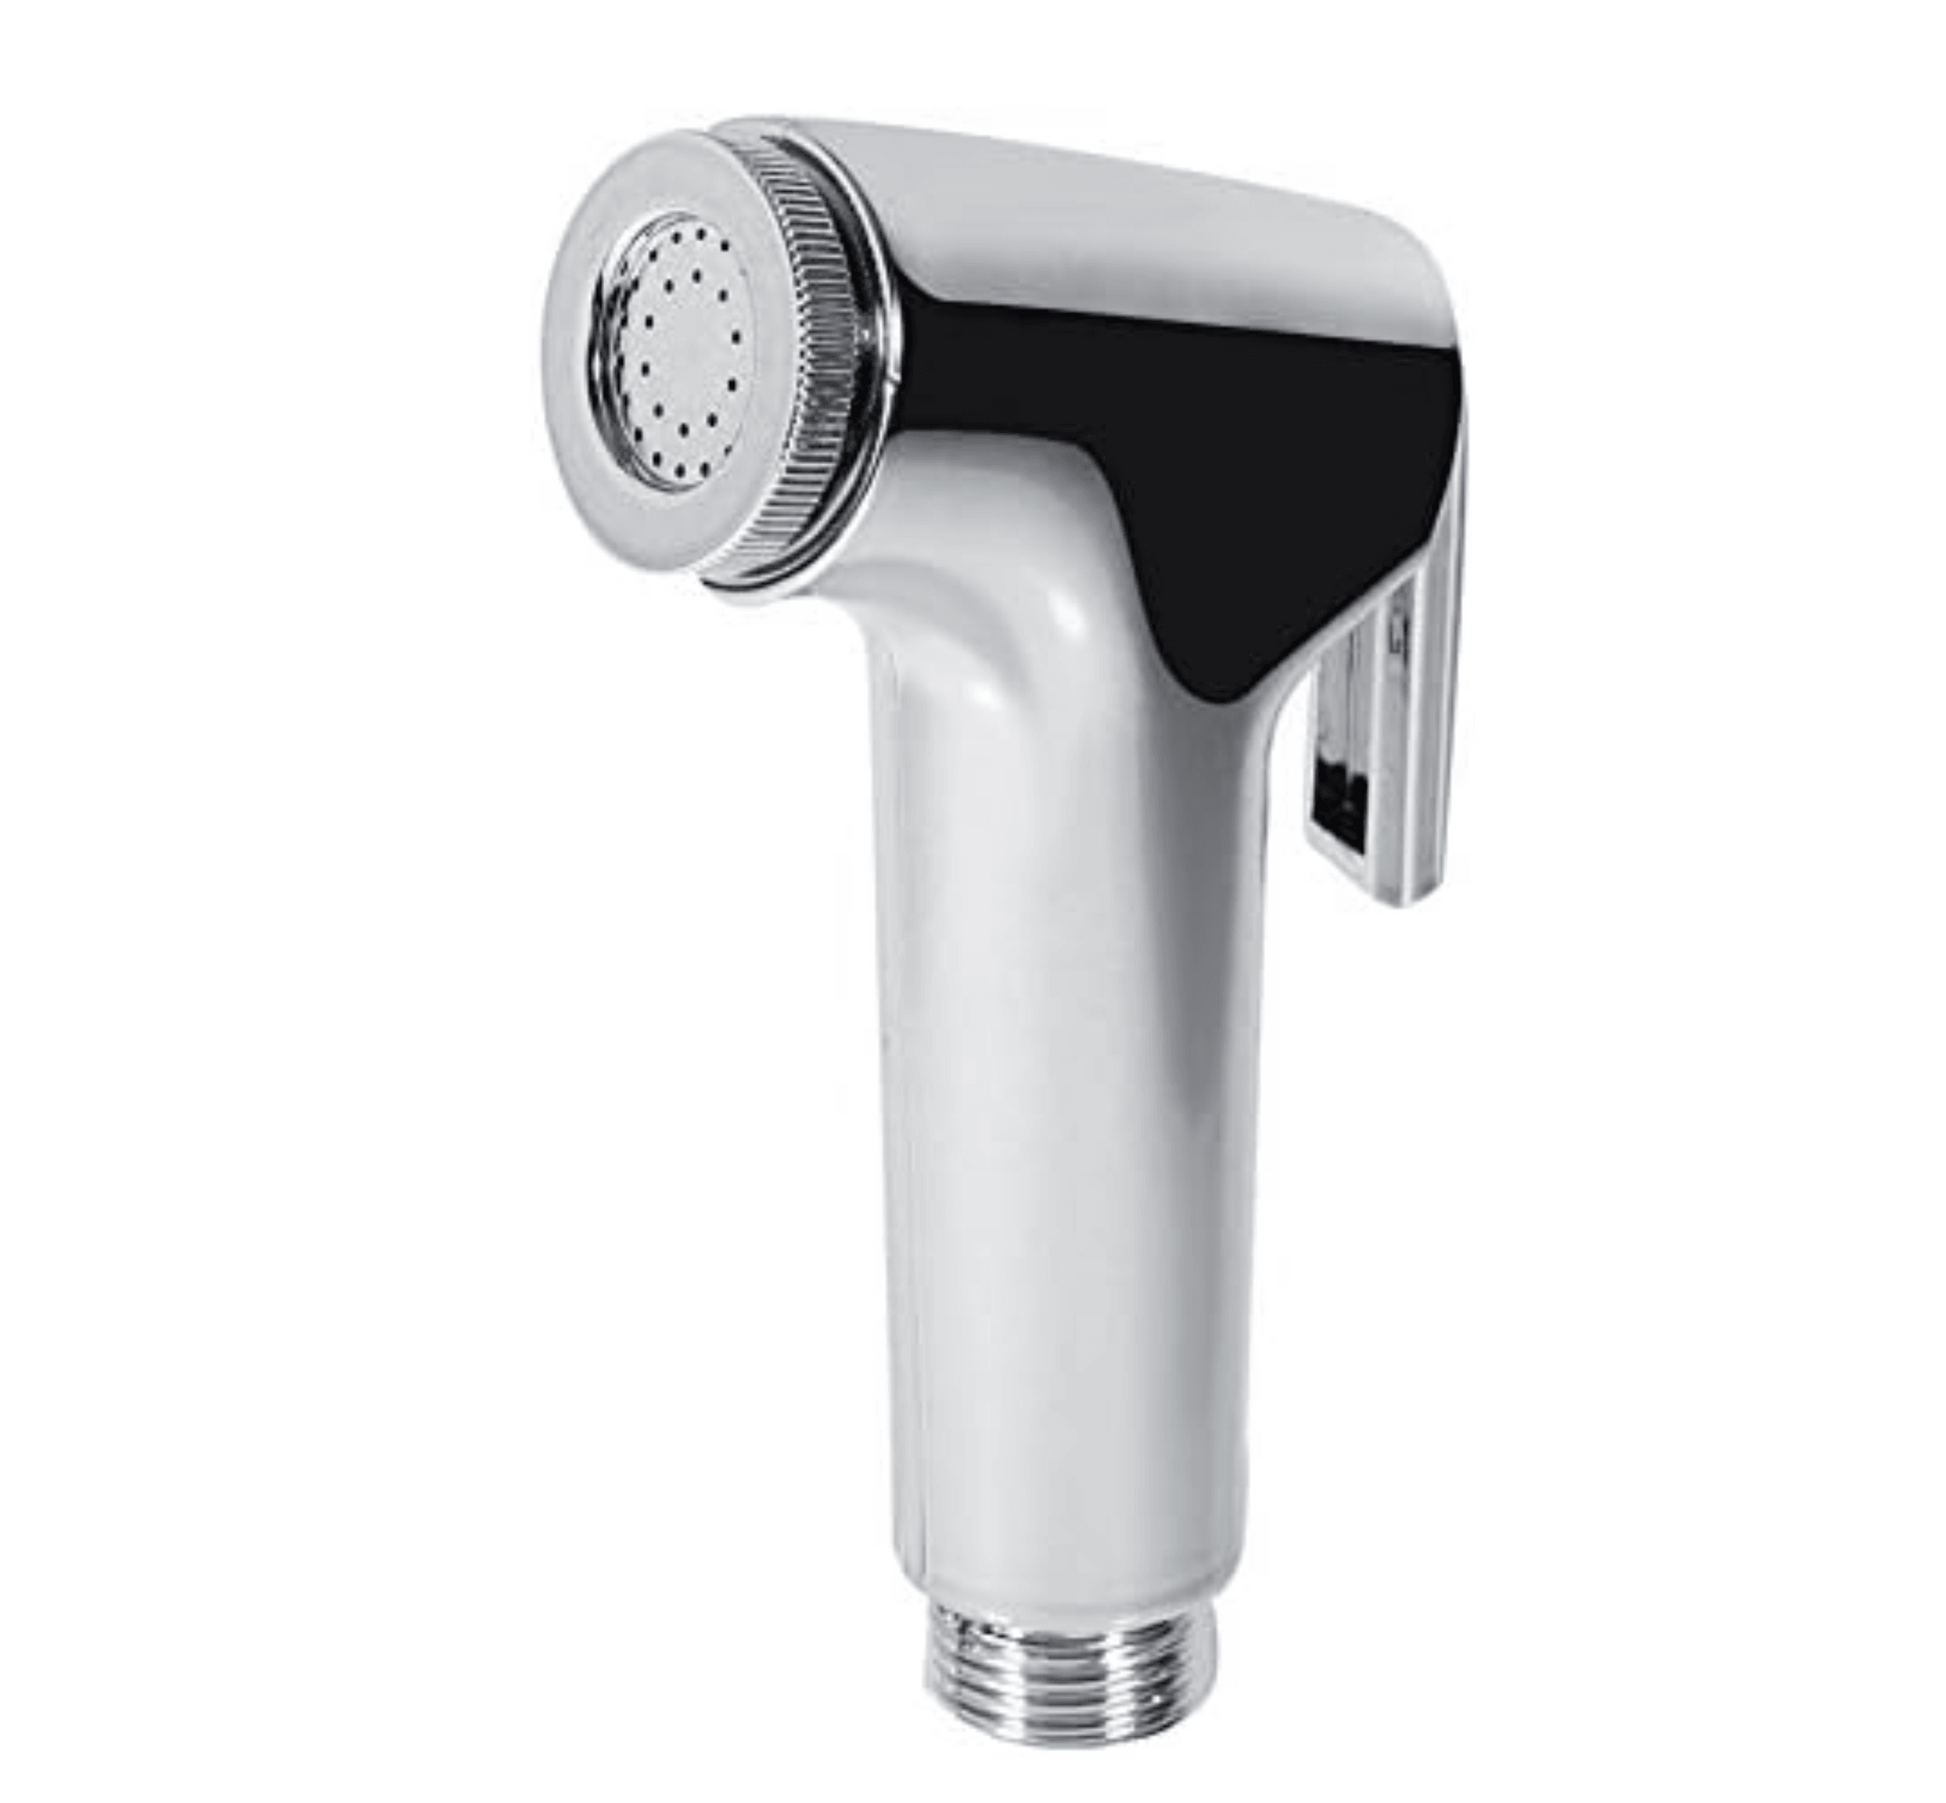 health faucet bidet sprayer jaquar hose pipe cleaning chrome silver gun material bathroom design best quality